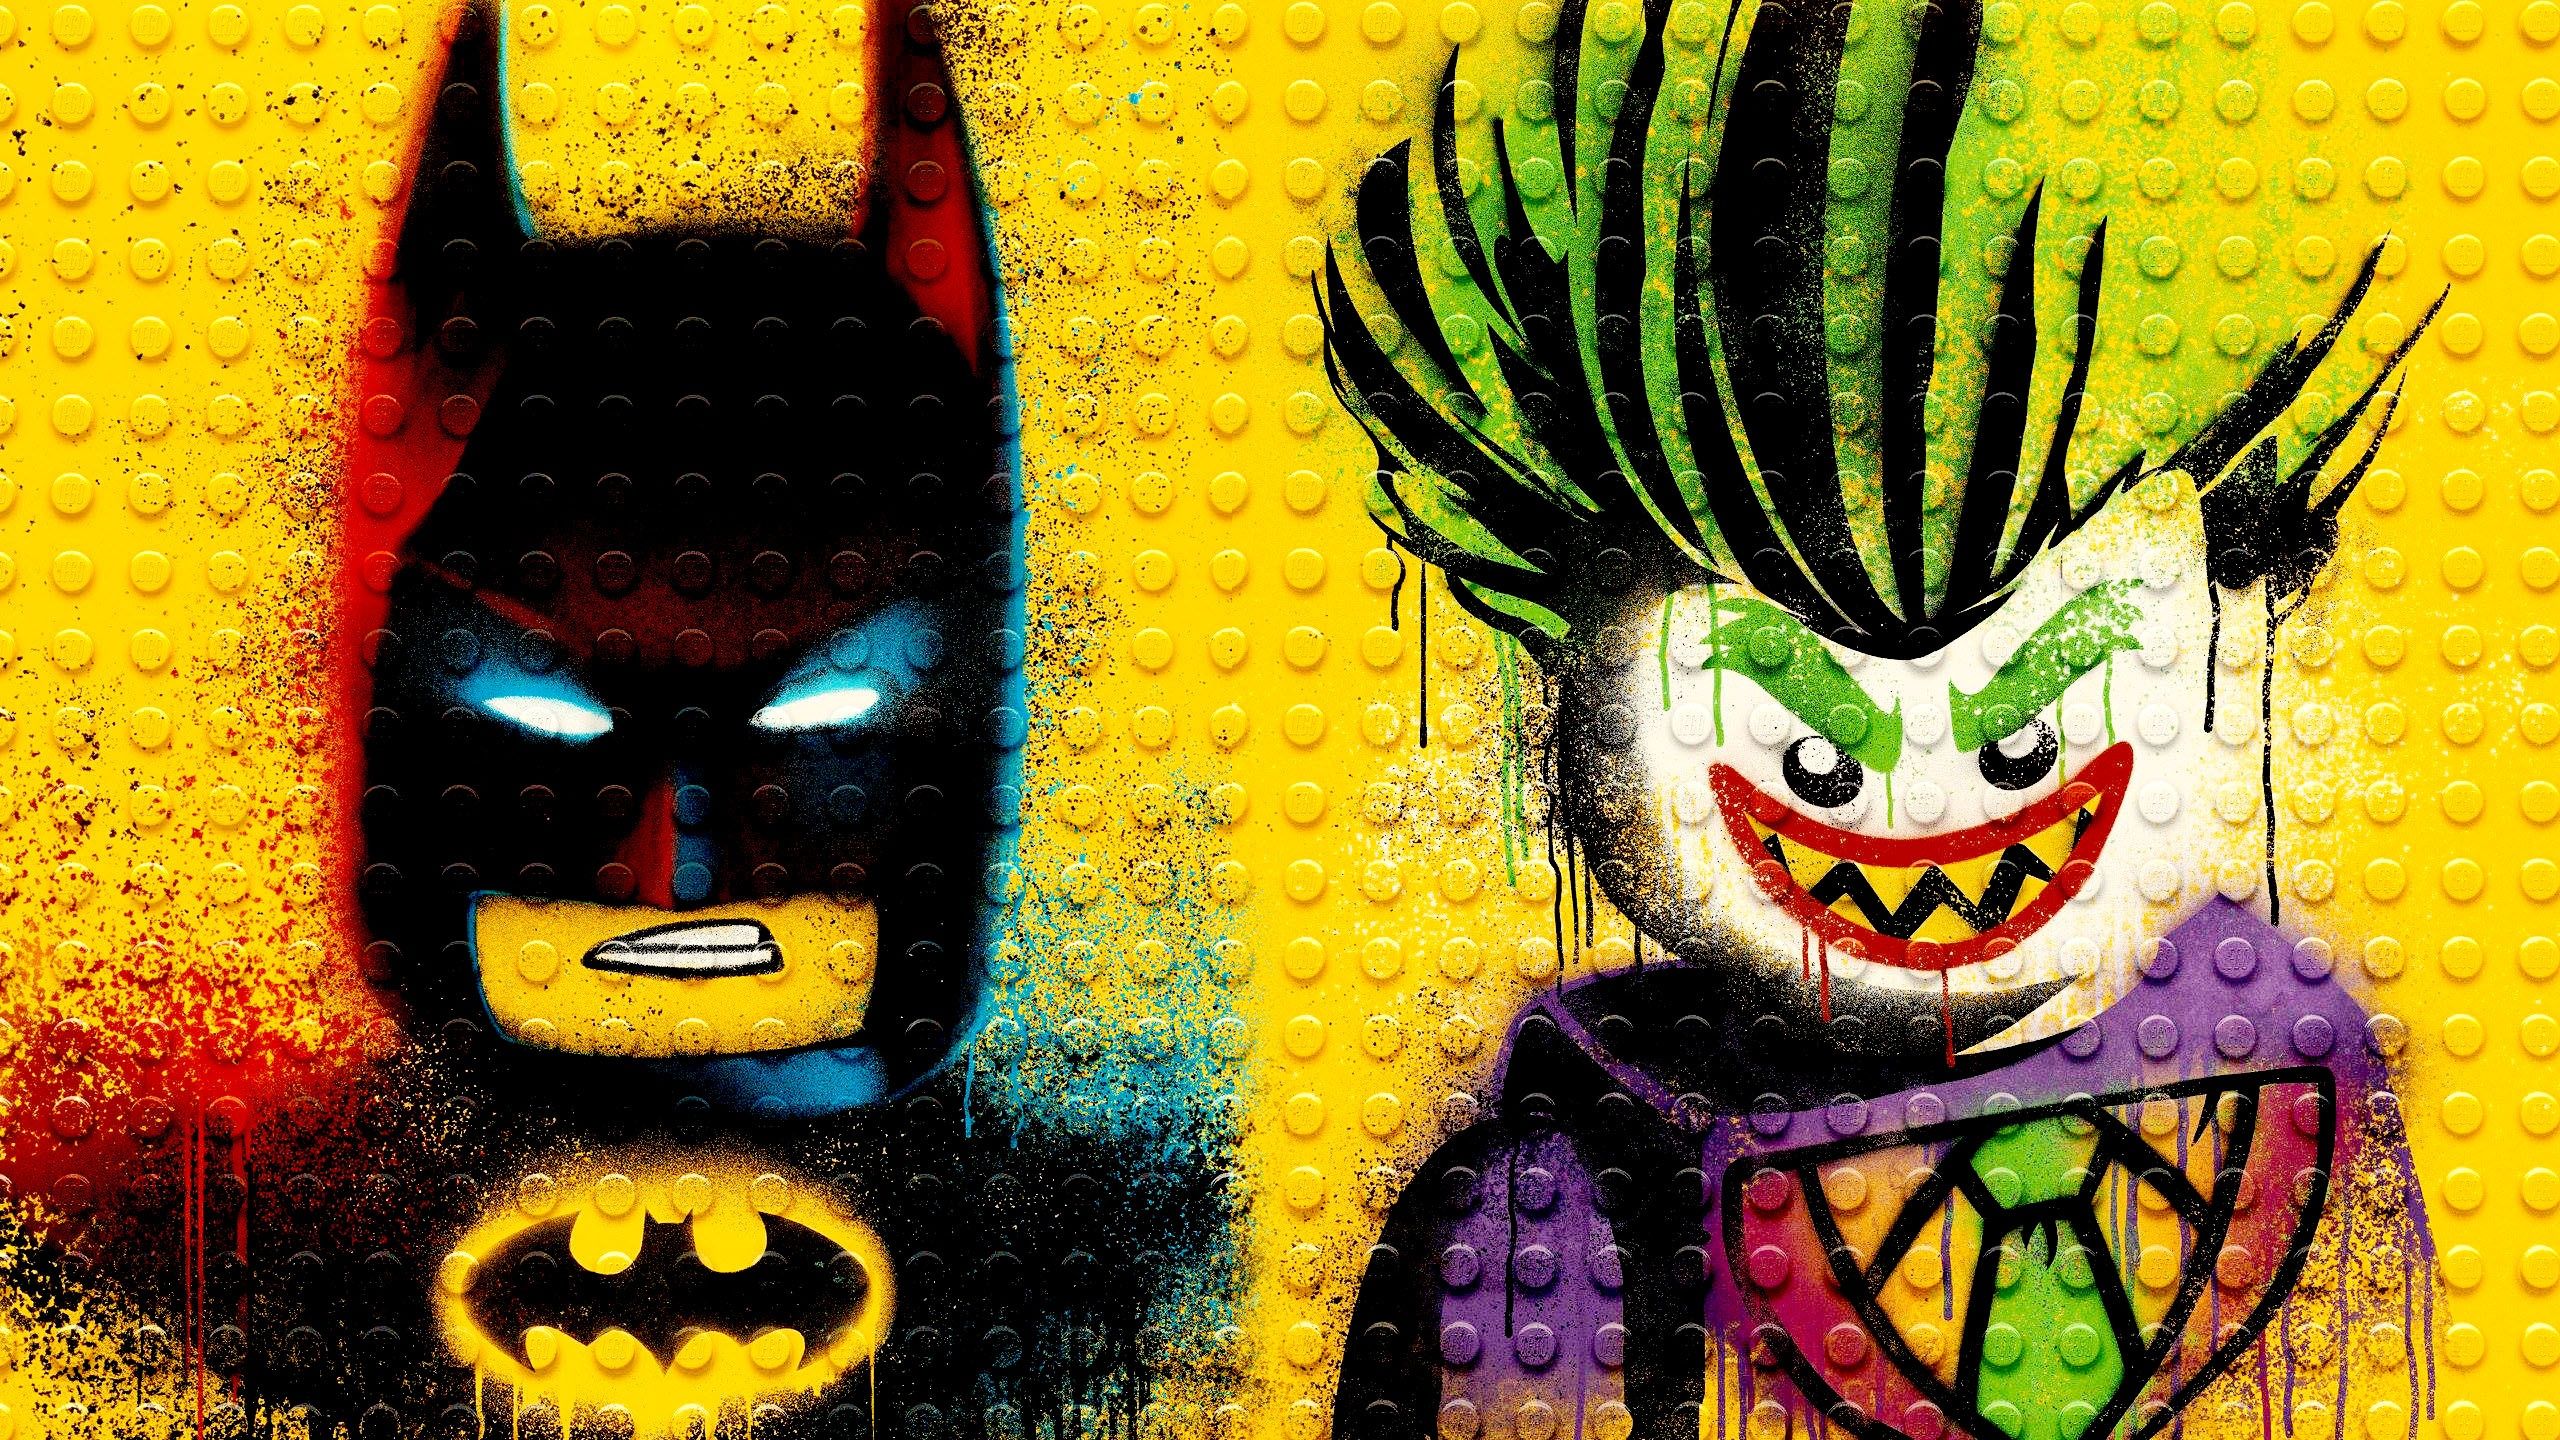 Free download The Lego Batman Movie Wallpaper 17 2560 X 1440 stmednet [2560x1440] for your Desktop, Mobile & Tablet. Explore Lego Batman Movie Wallpaper. Lego Batman Movie Wallpaper, The